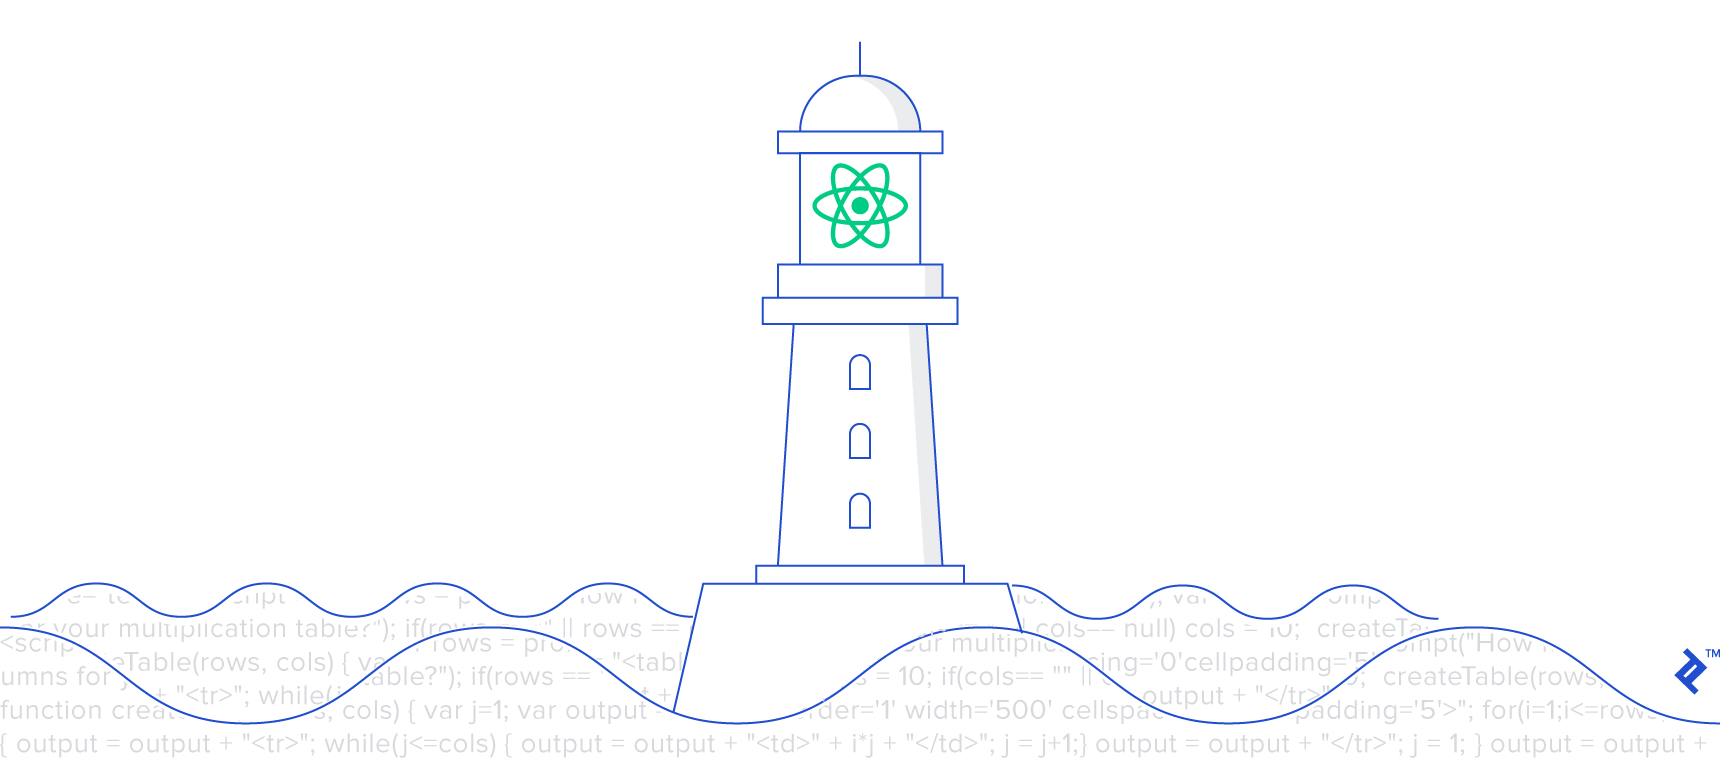 React 是一座耸立在 JavaScript 代码海上醒目的灯塔